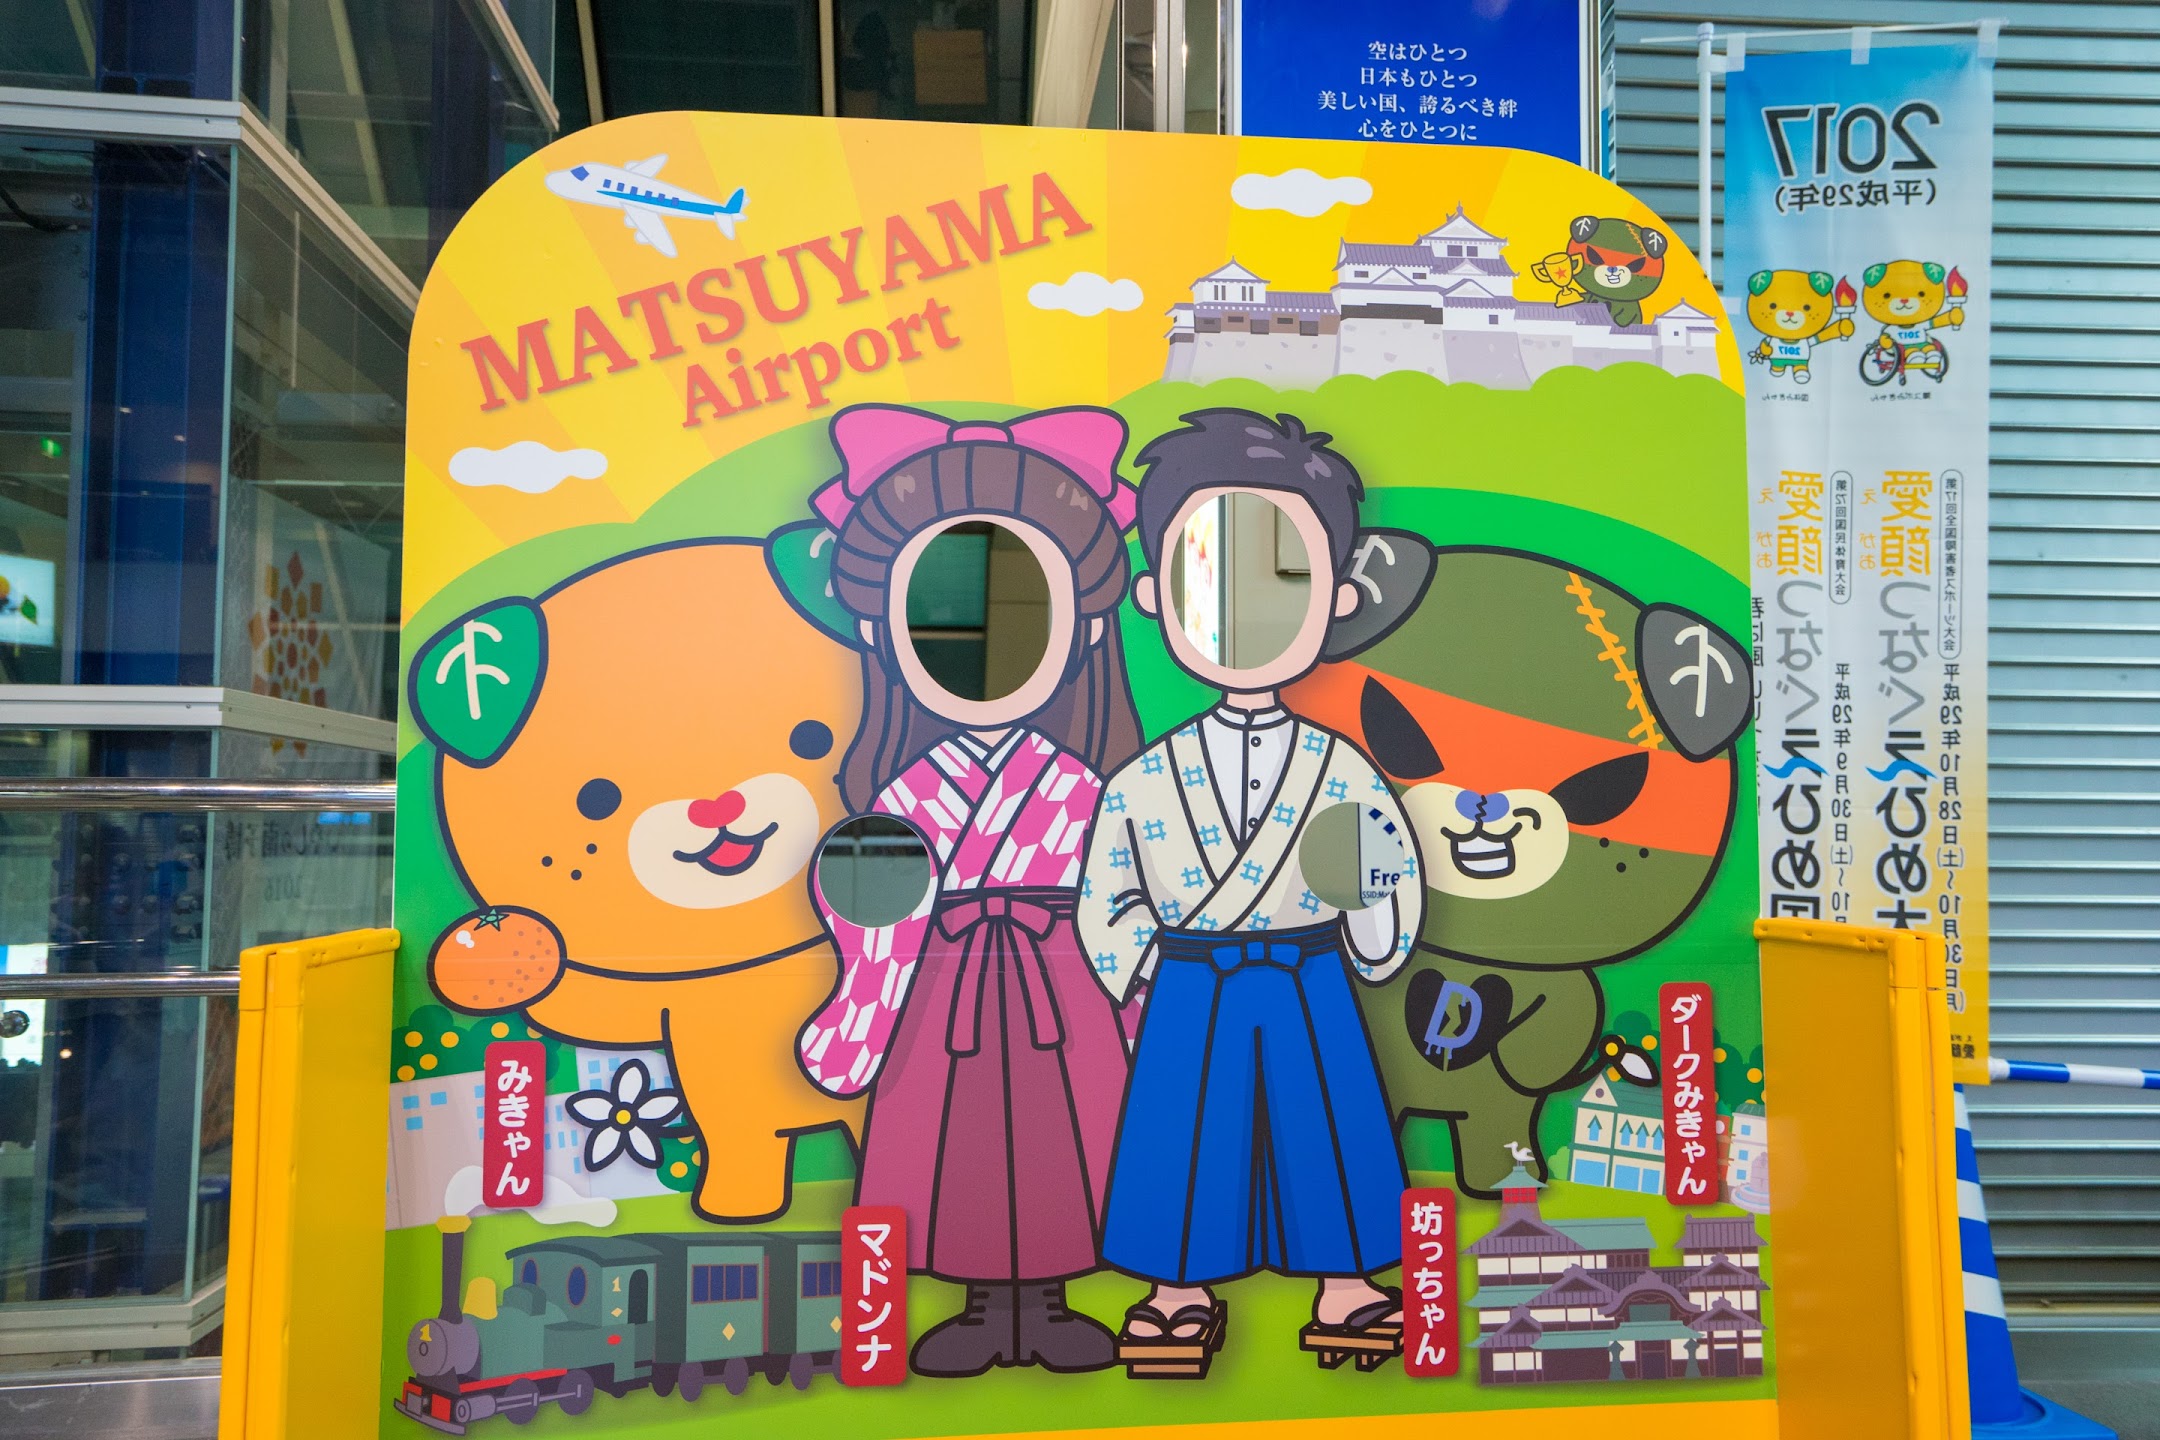 Matsuyama Airport Mican Panel